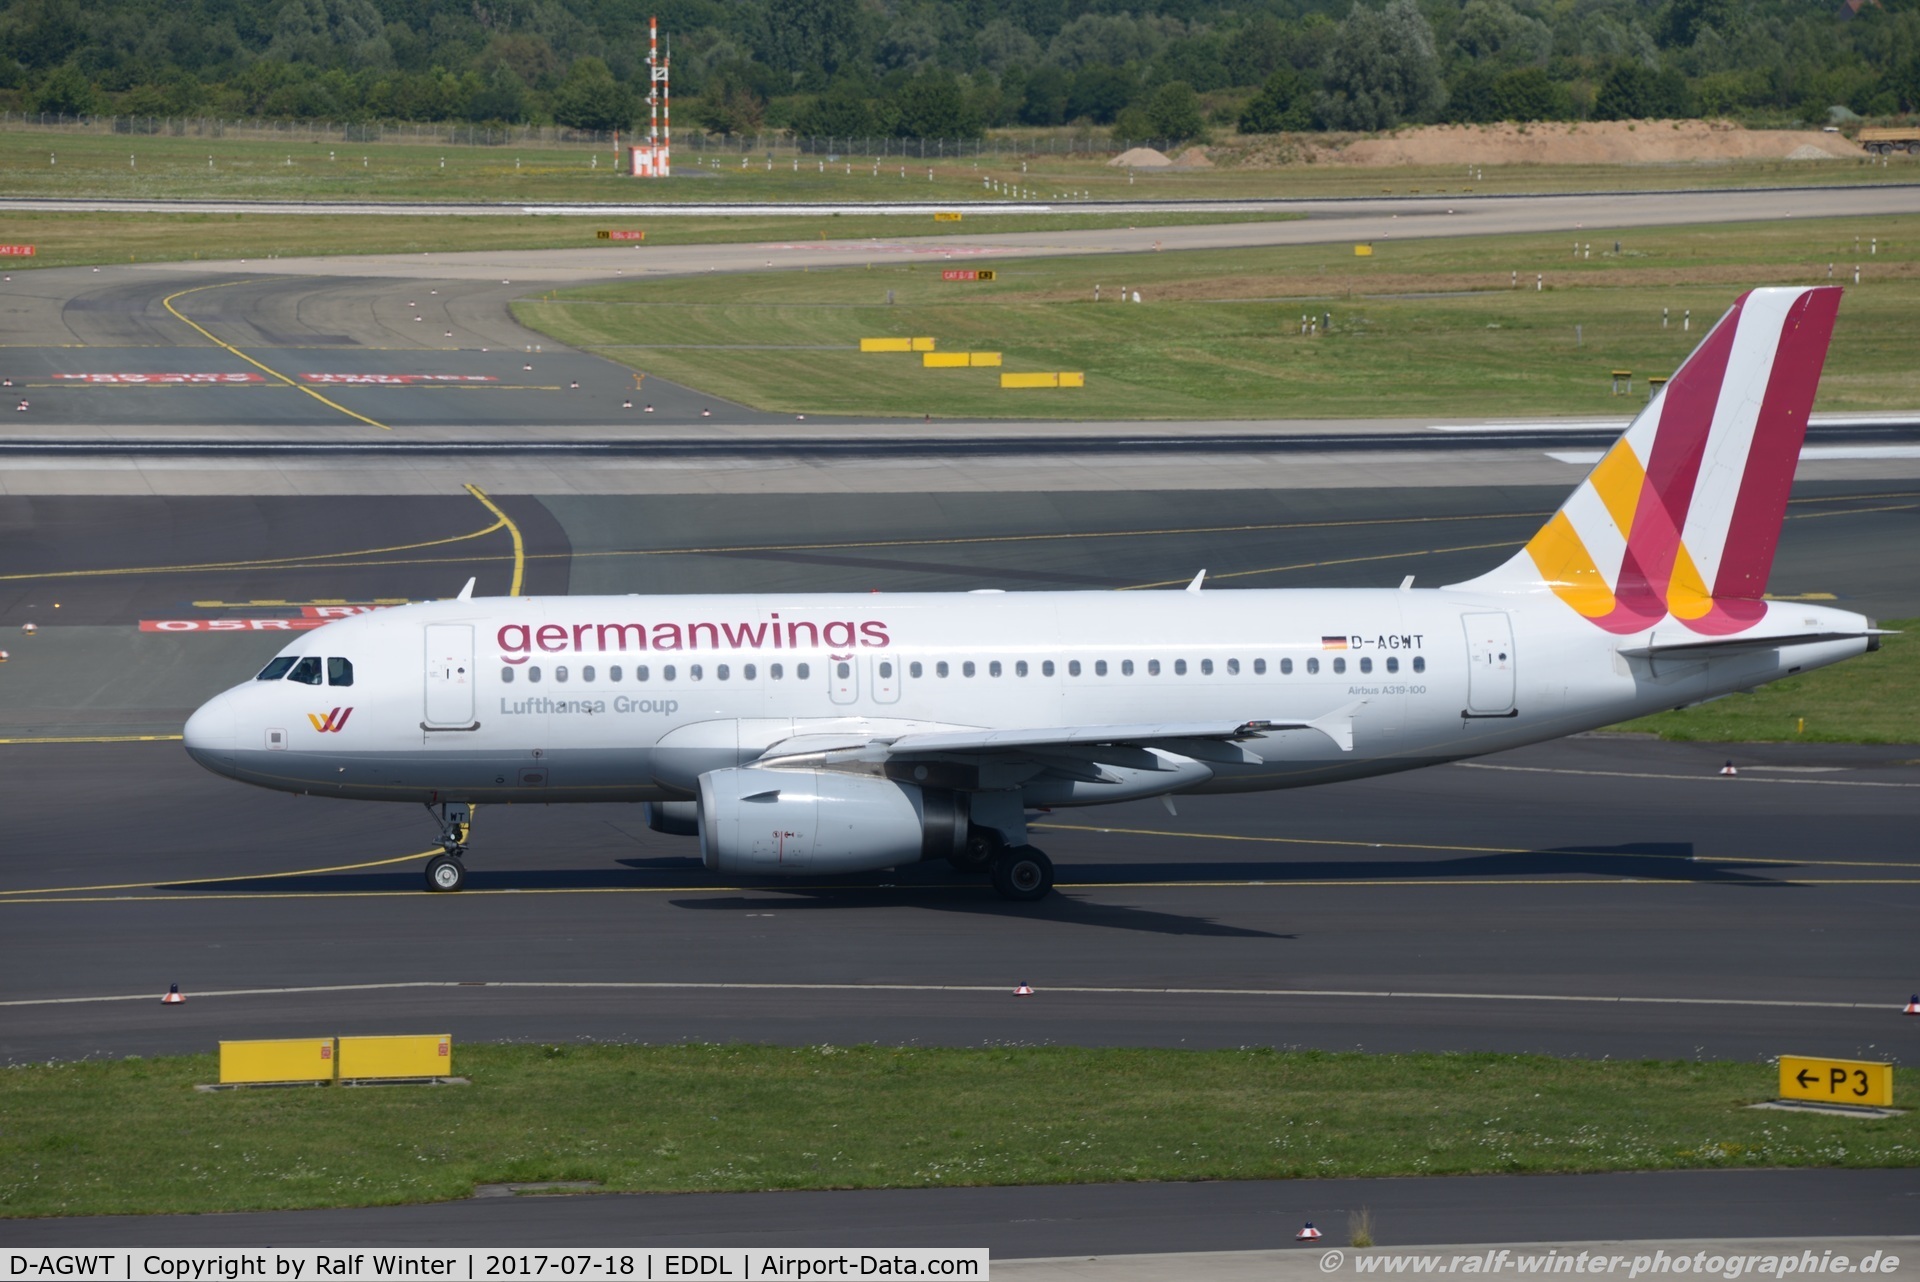 D-AGWT, 2012 Airbus A319-132 C/N 5043, Airbus A319-132 - 4U GWI Germanwings - 5043 - D-AGWT - 18.07.2017 - DUS